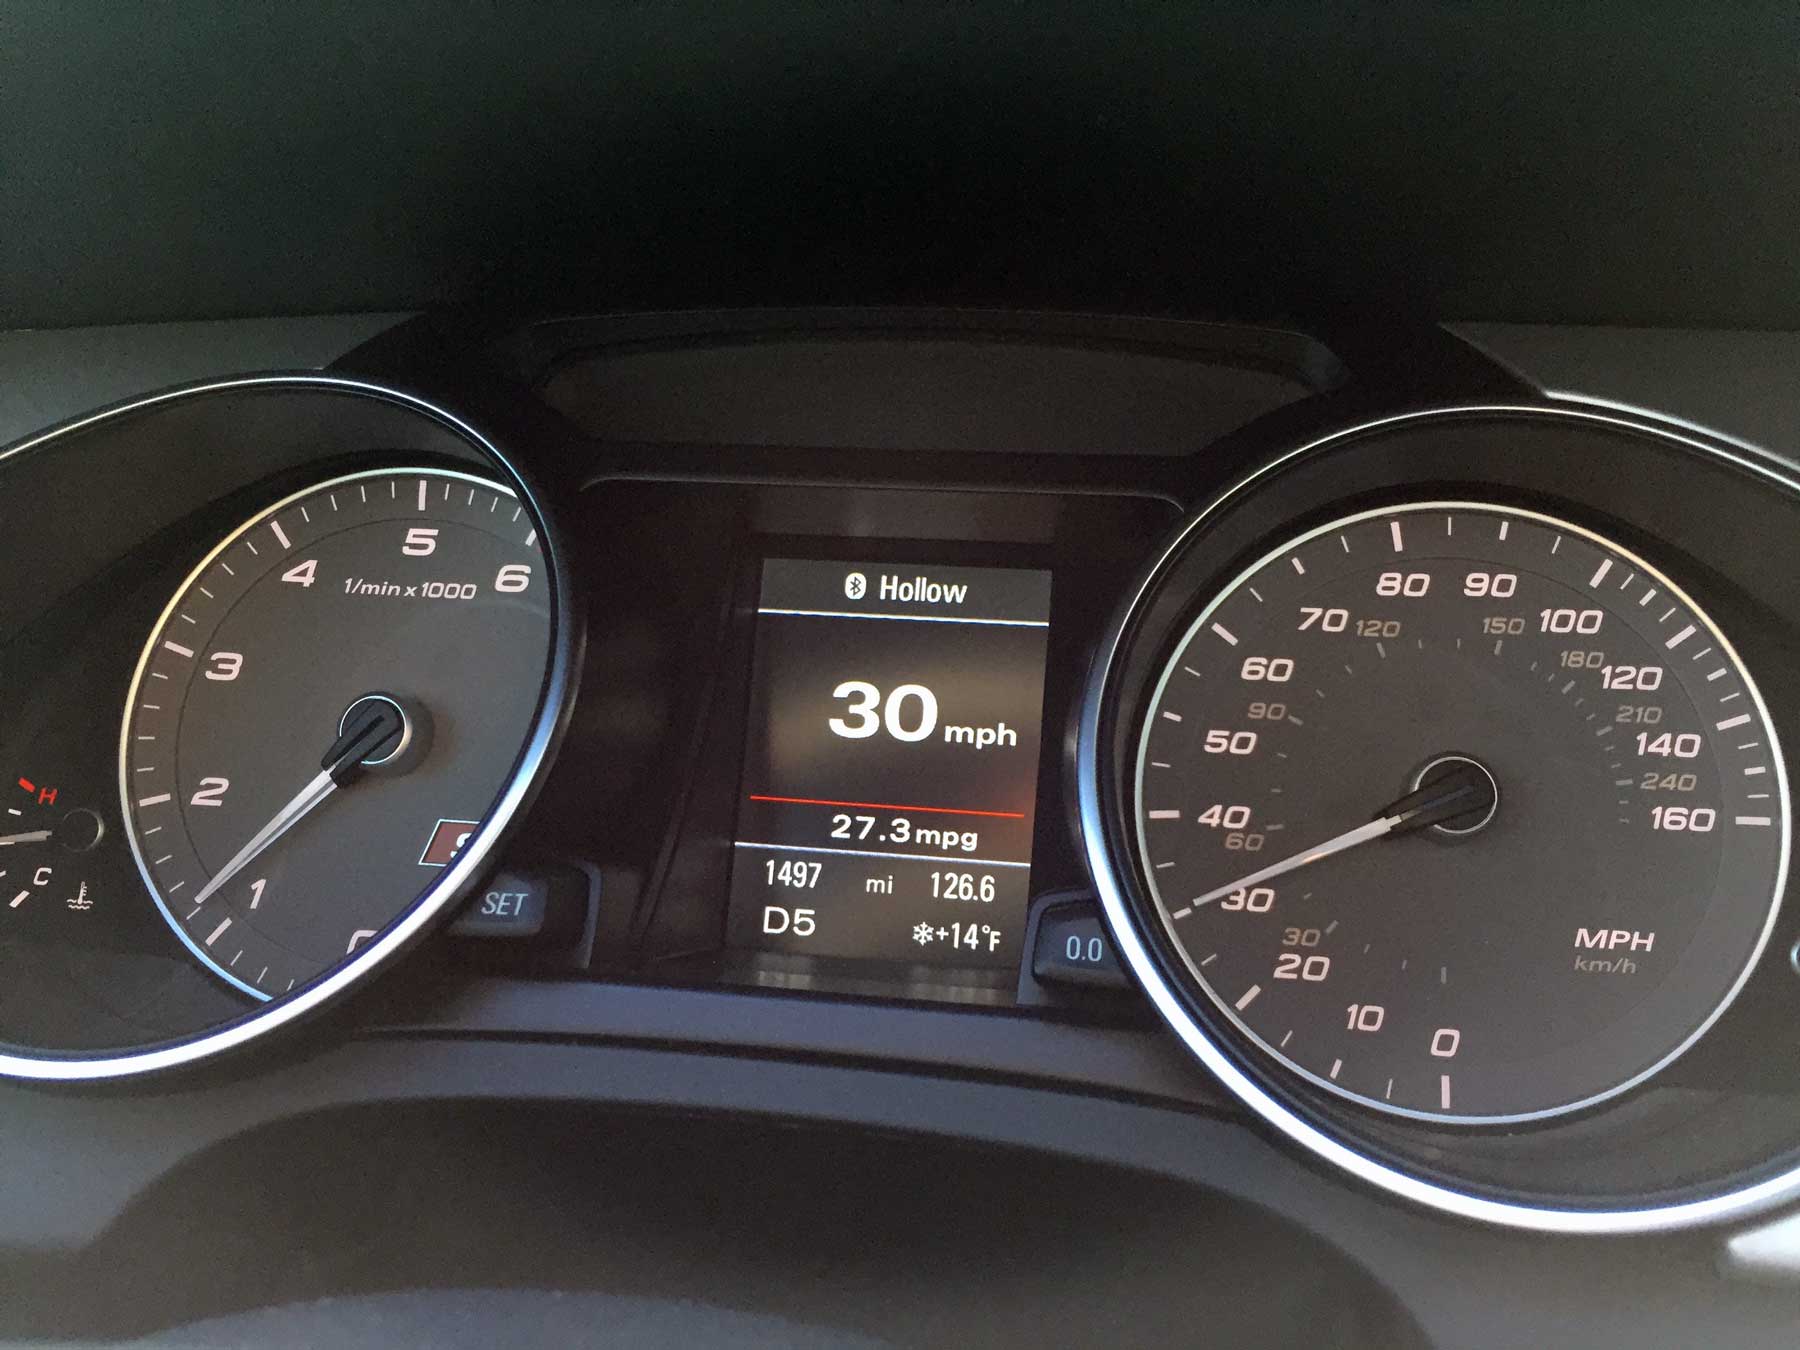 Audi S5 Current Gear Display